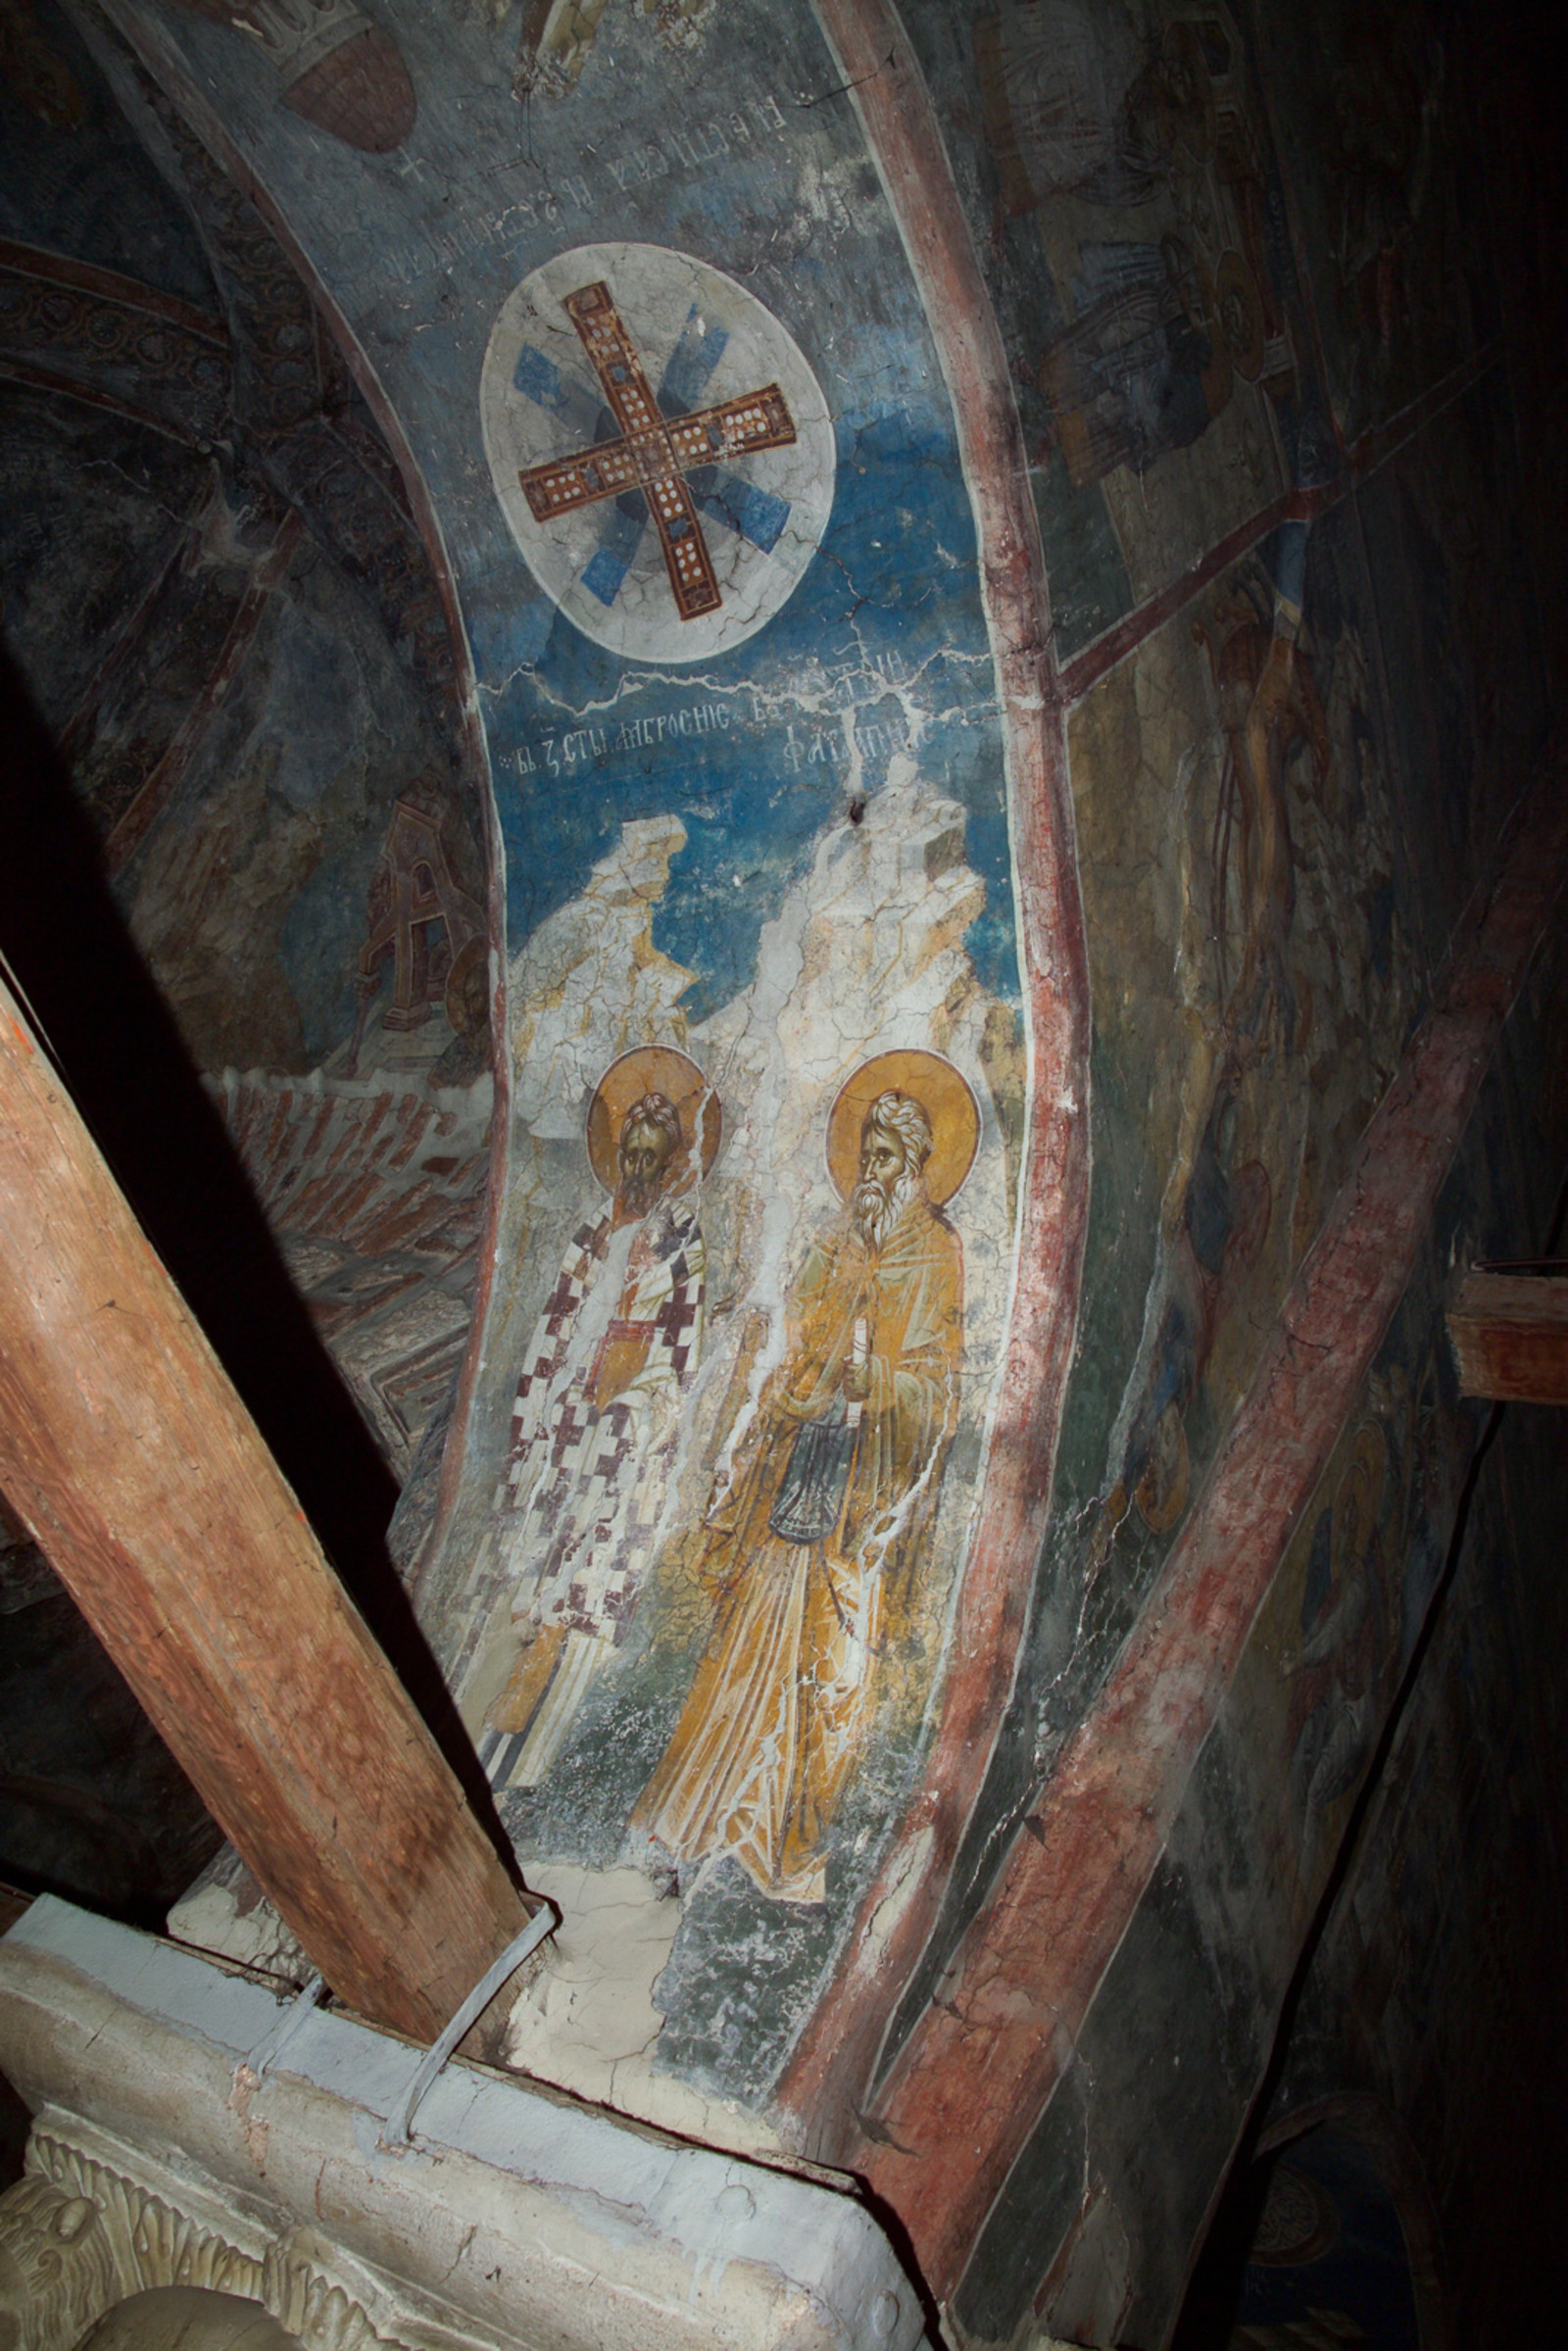 7V-2 December 7 & 8 - St. Ambrosius of Mediolanon and St. Patapius (figures)